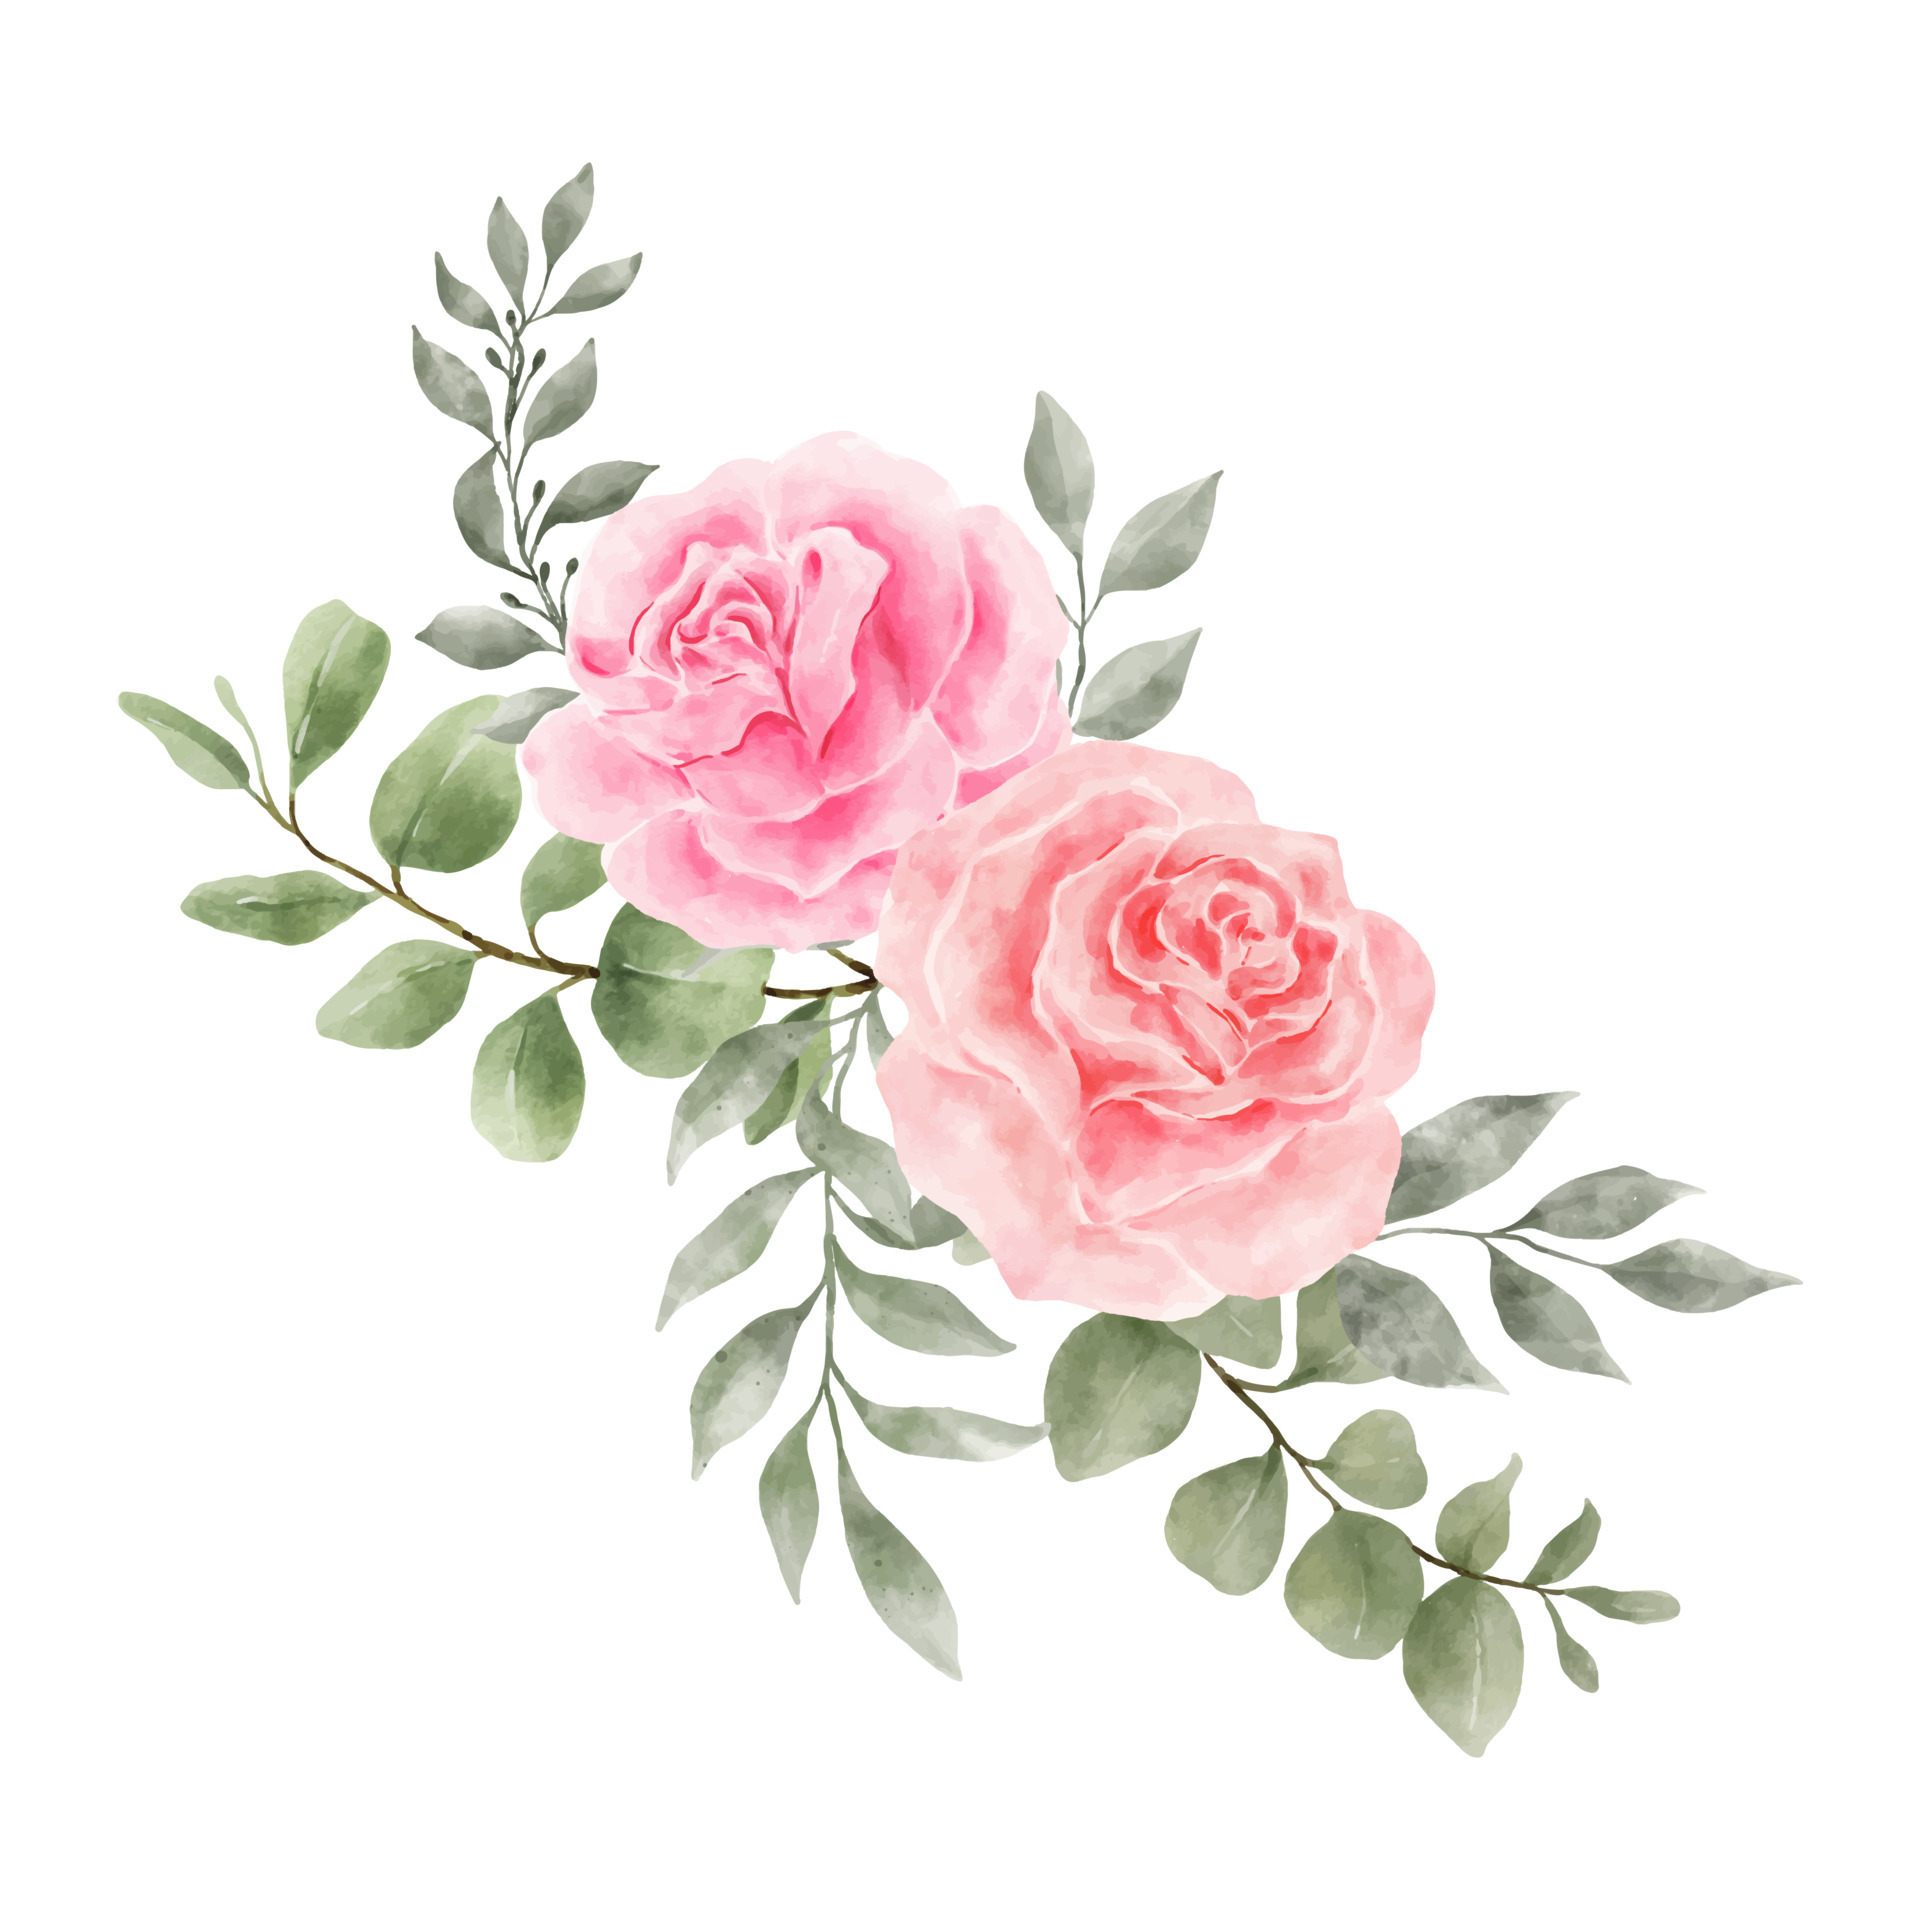 Convite Casamento Rosa Floral Aquarela Watercolor